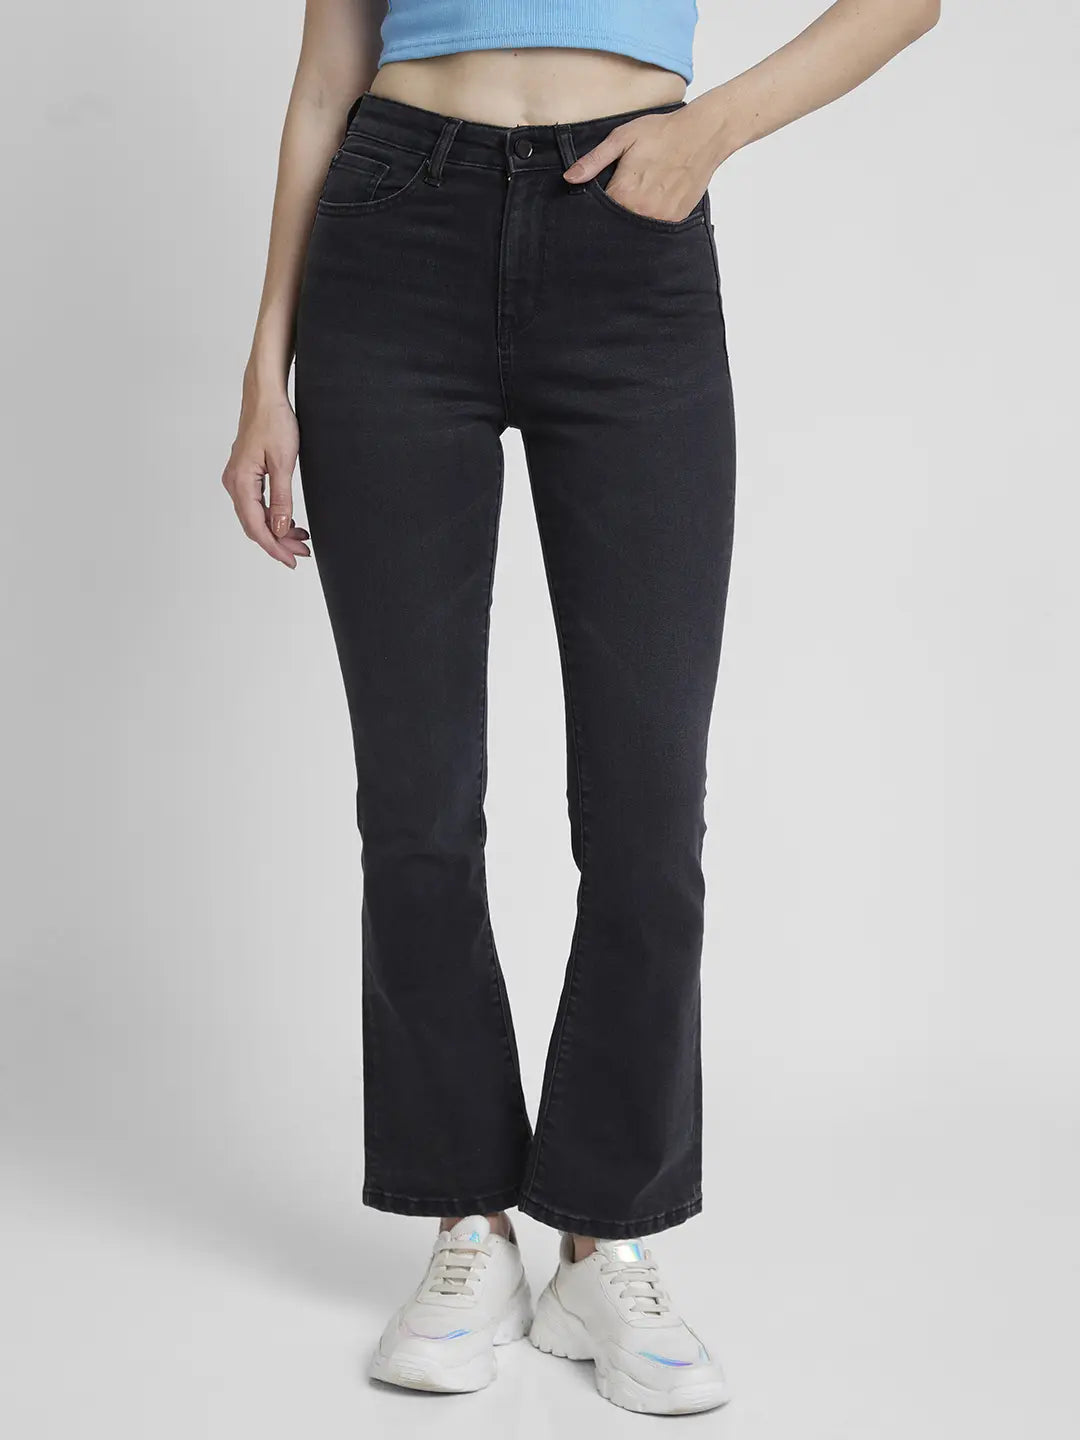 Shop Women Black Fit Ankle Length Clean Look Jeans - Spykar